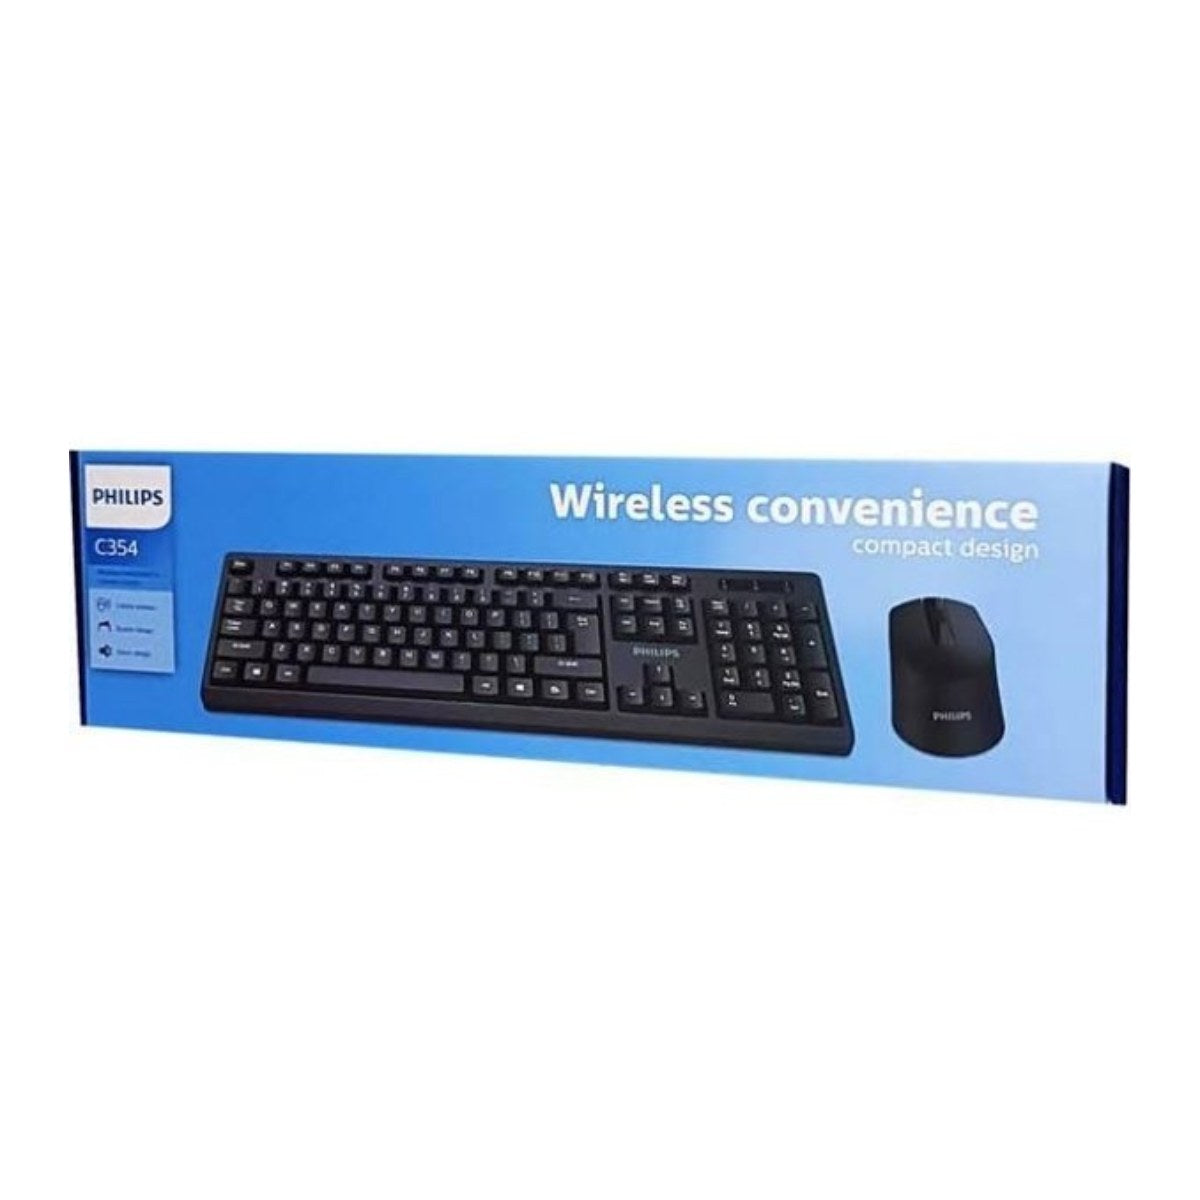 Philips Wireless mouse & keyboard Convenience C342 | ماوس وكيبورد لاسلكي من فيليبس